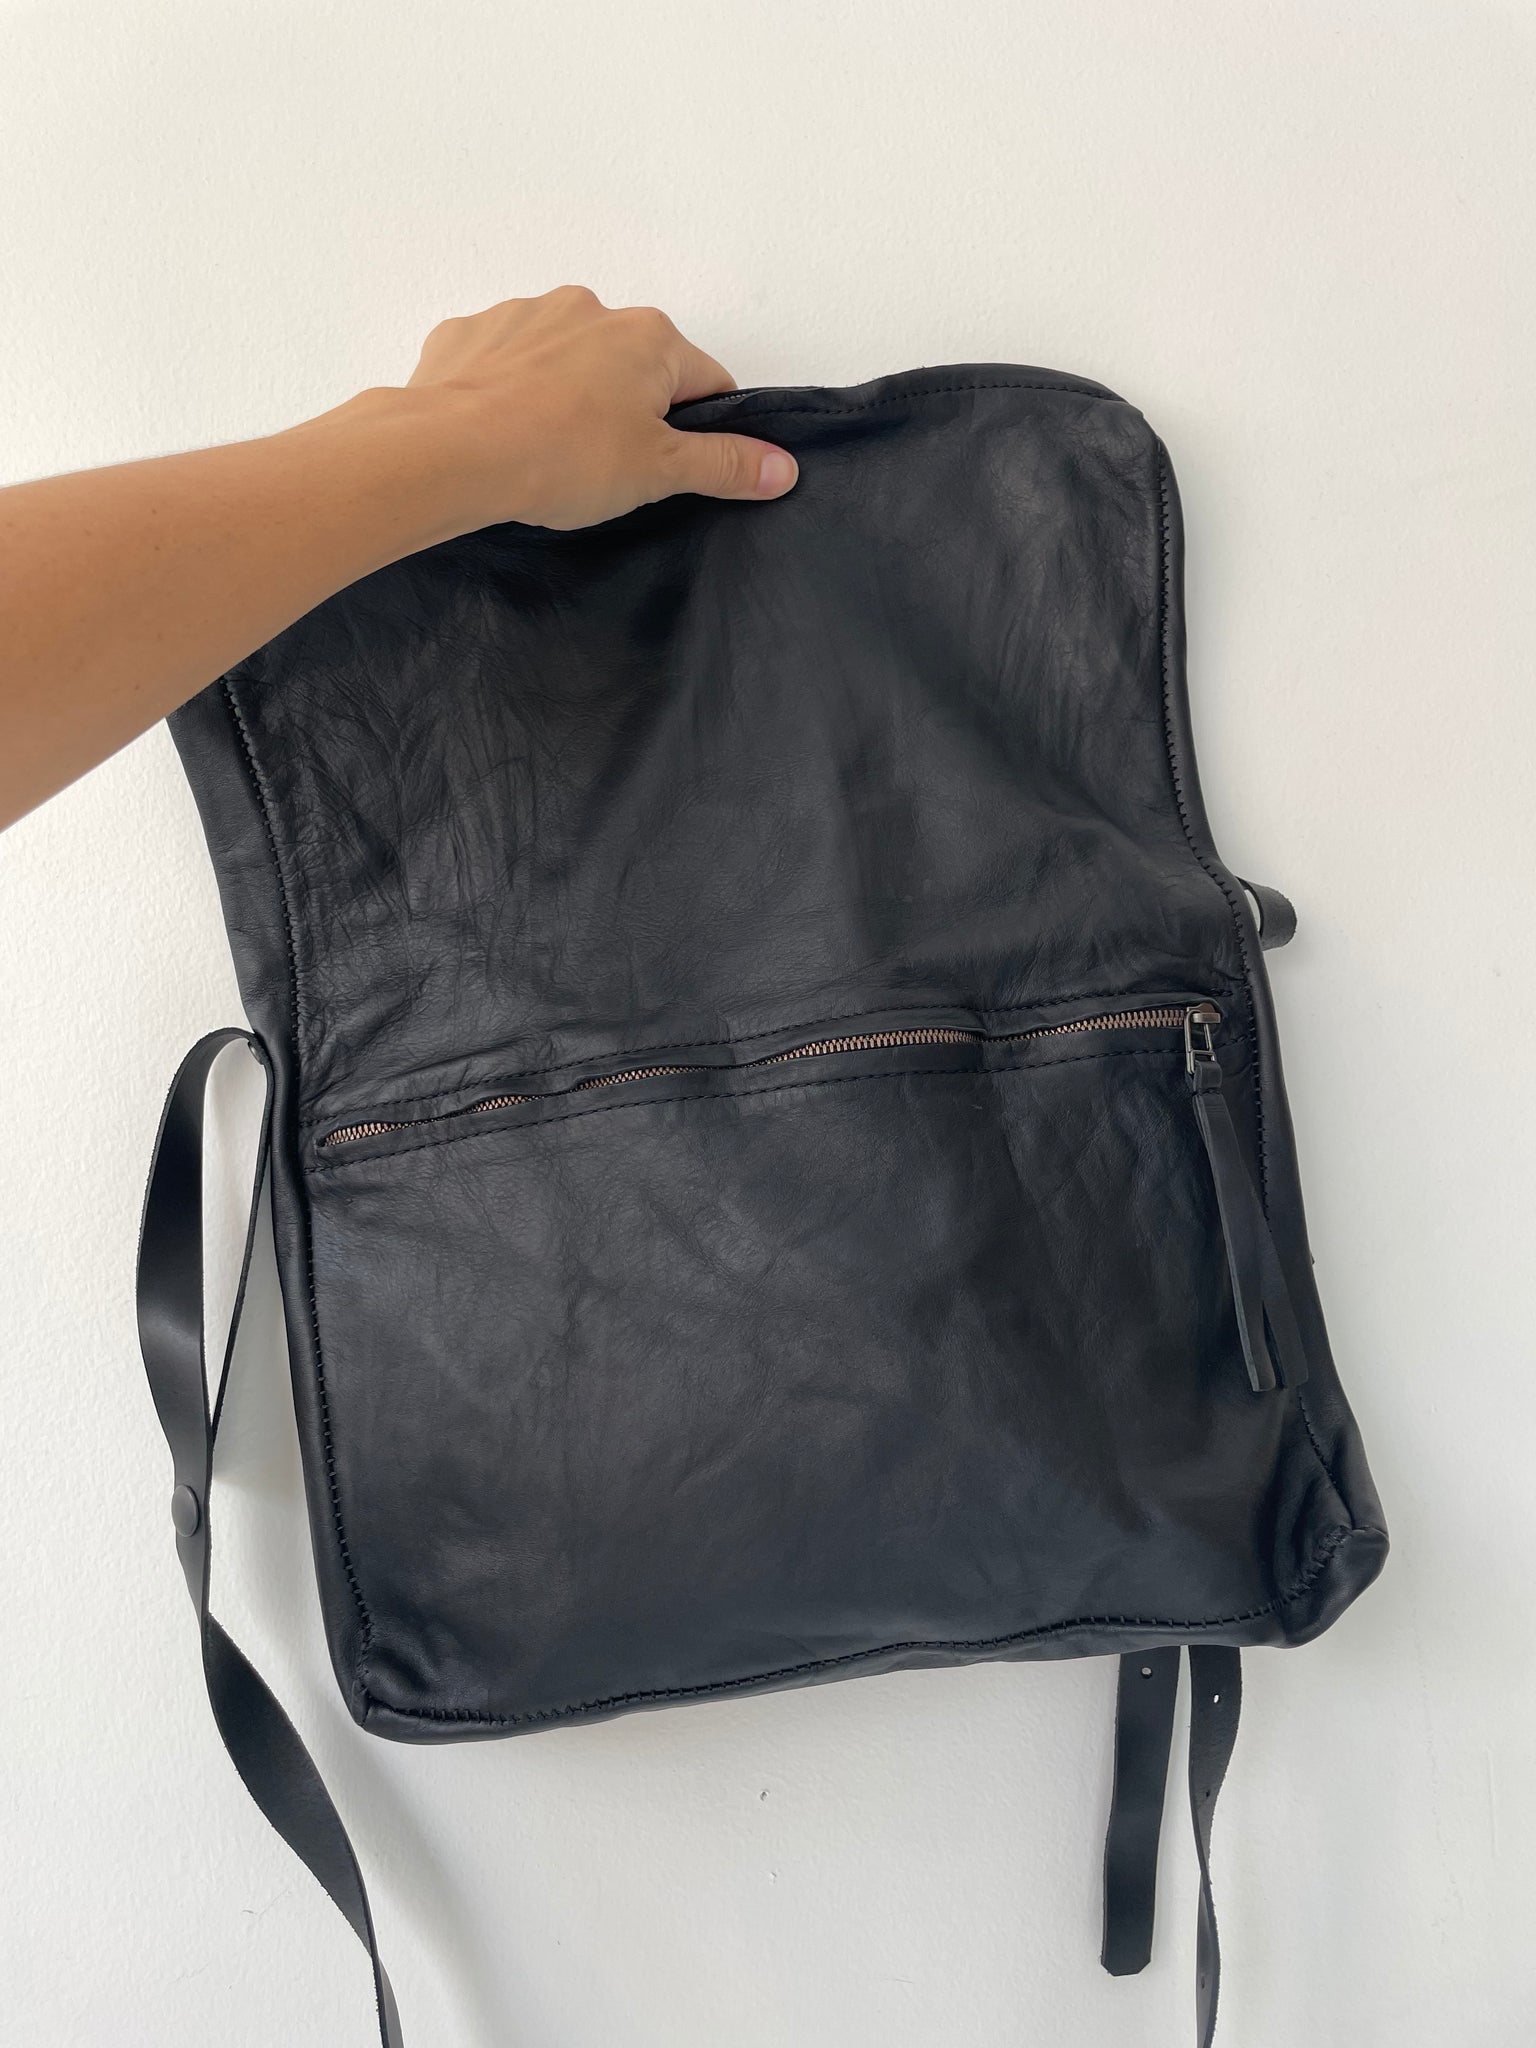 fold bag BLACK